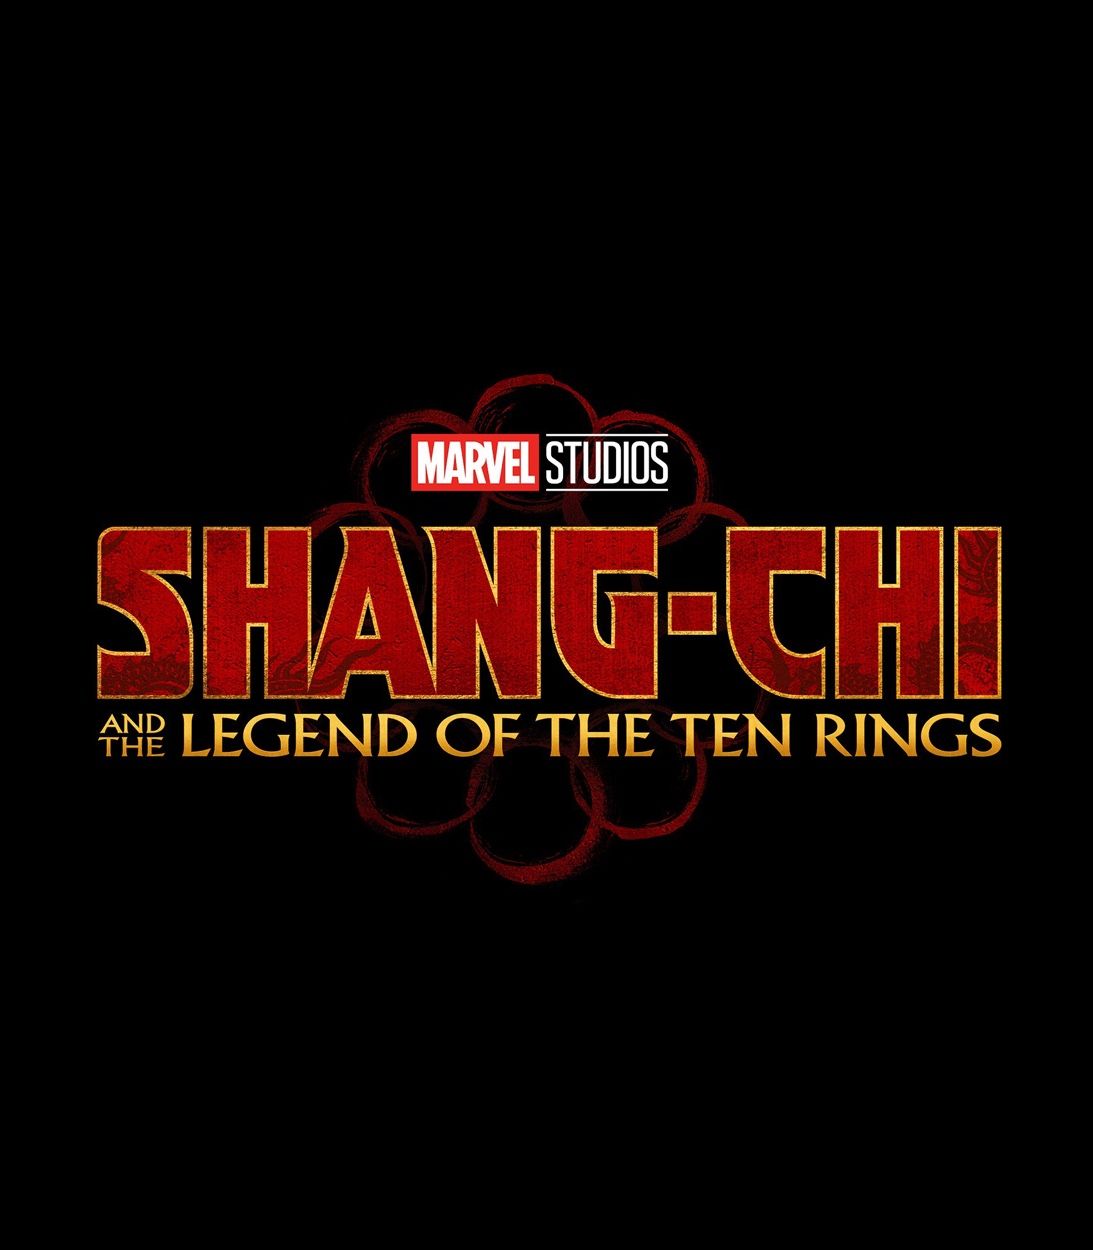 Shang Chi movie logo vertical TLDR